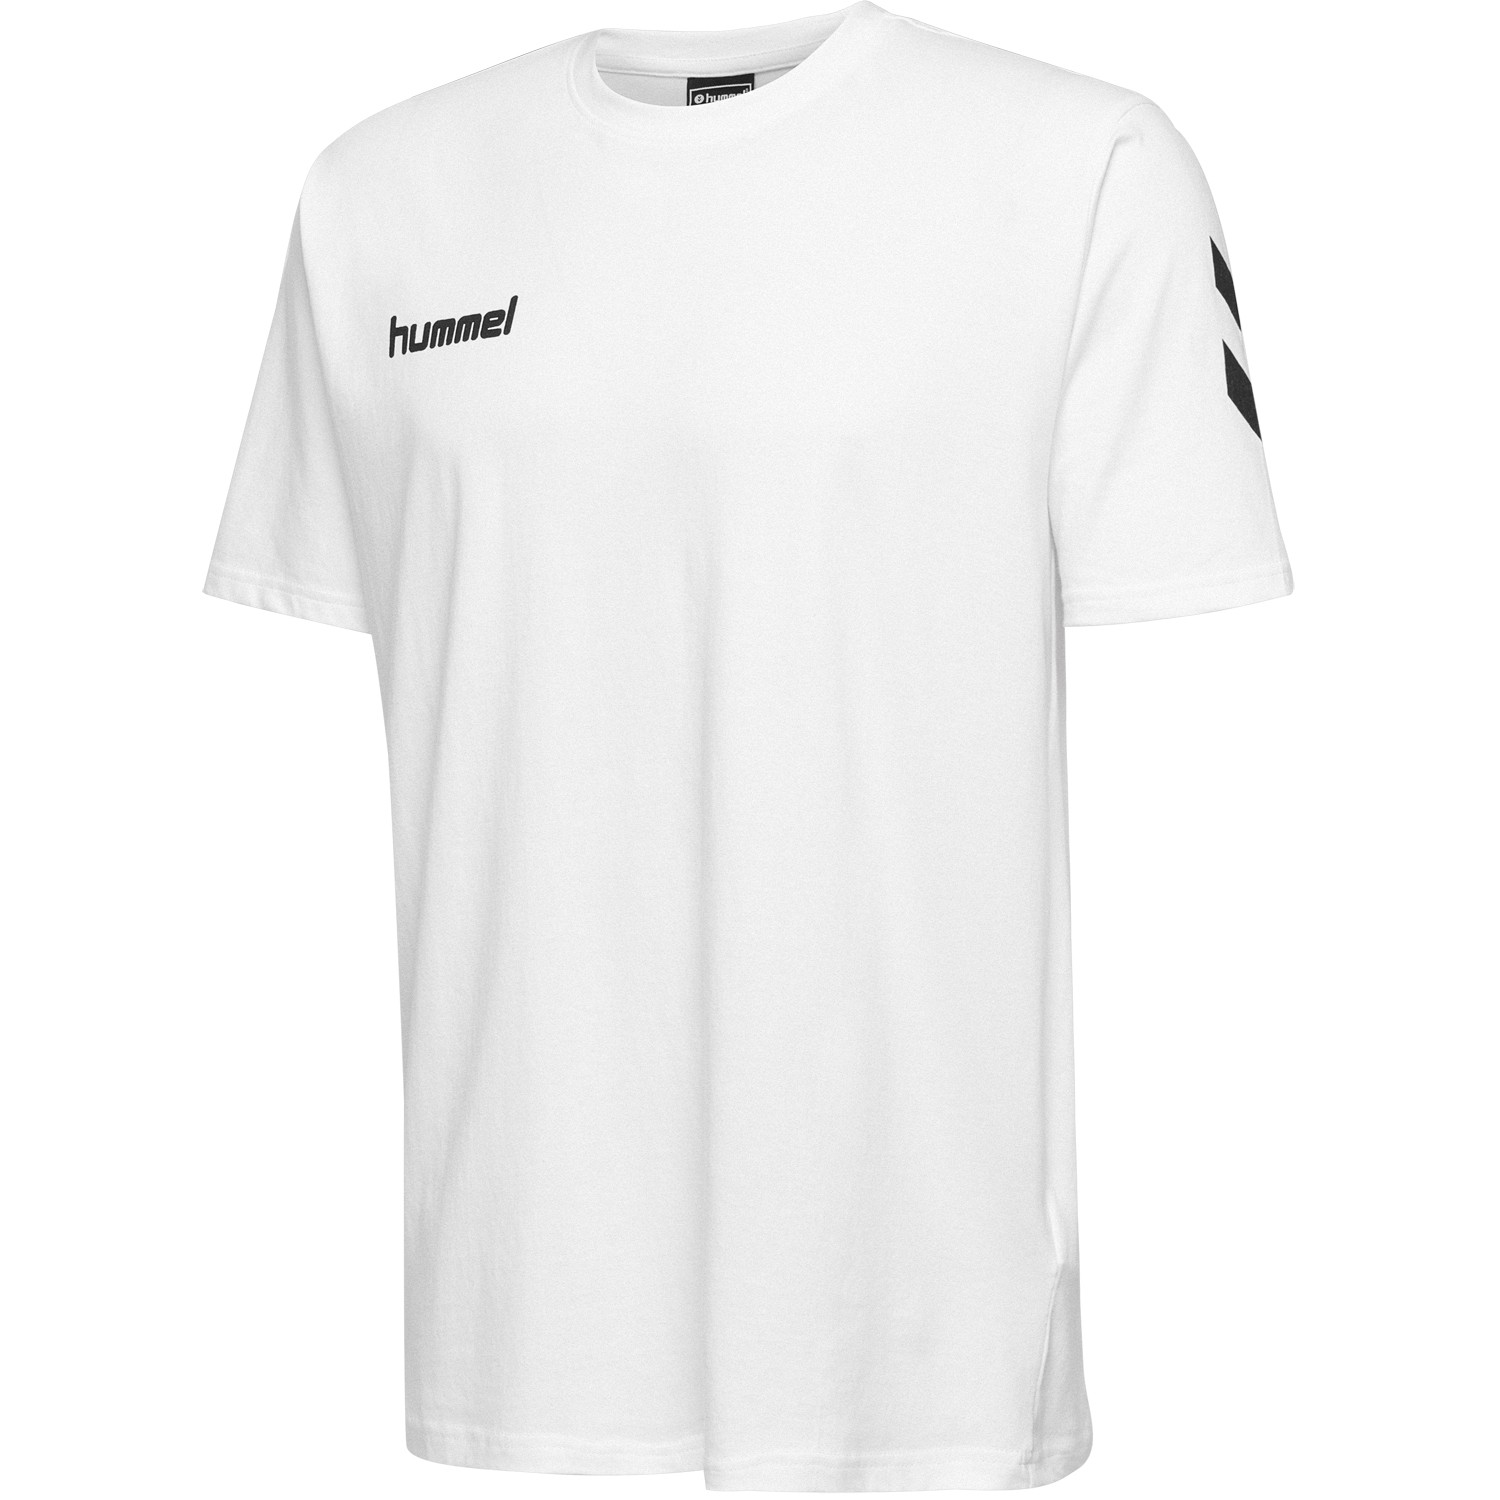 Hummel T-Shirts Hummel online T-Shirts kaufen 